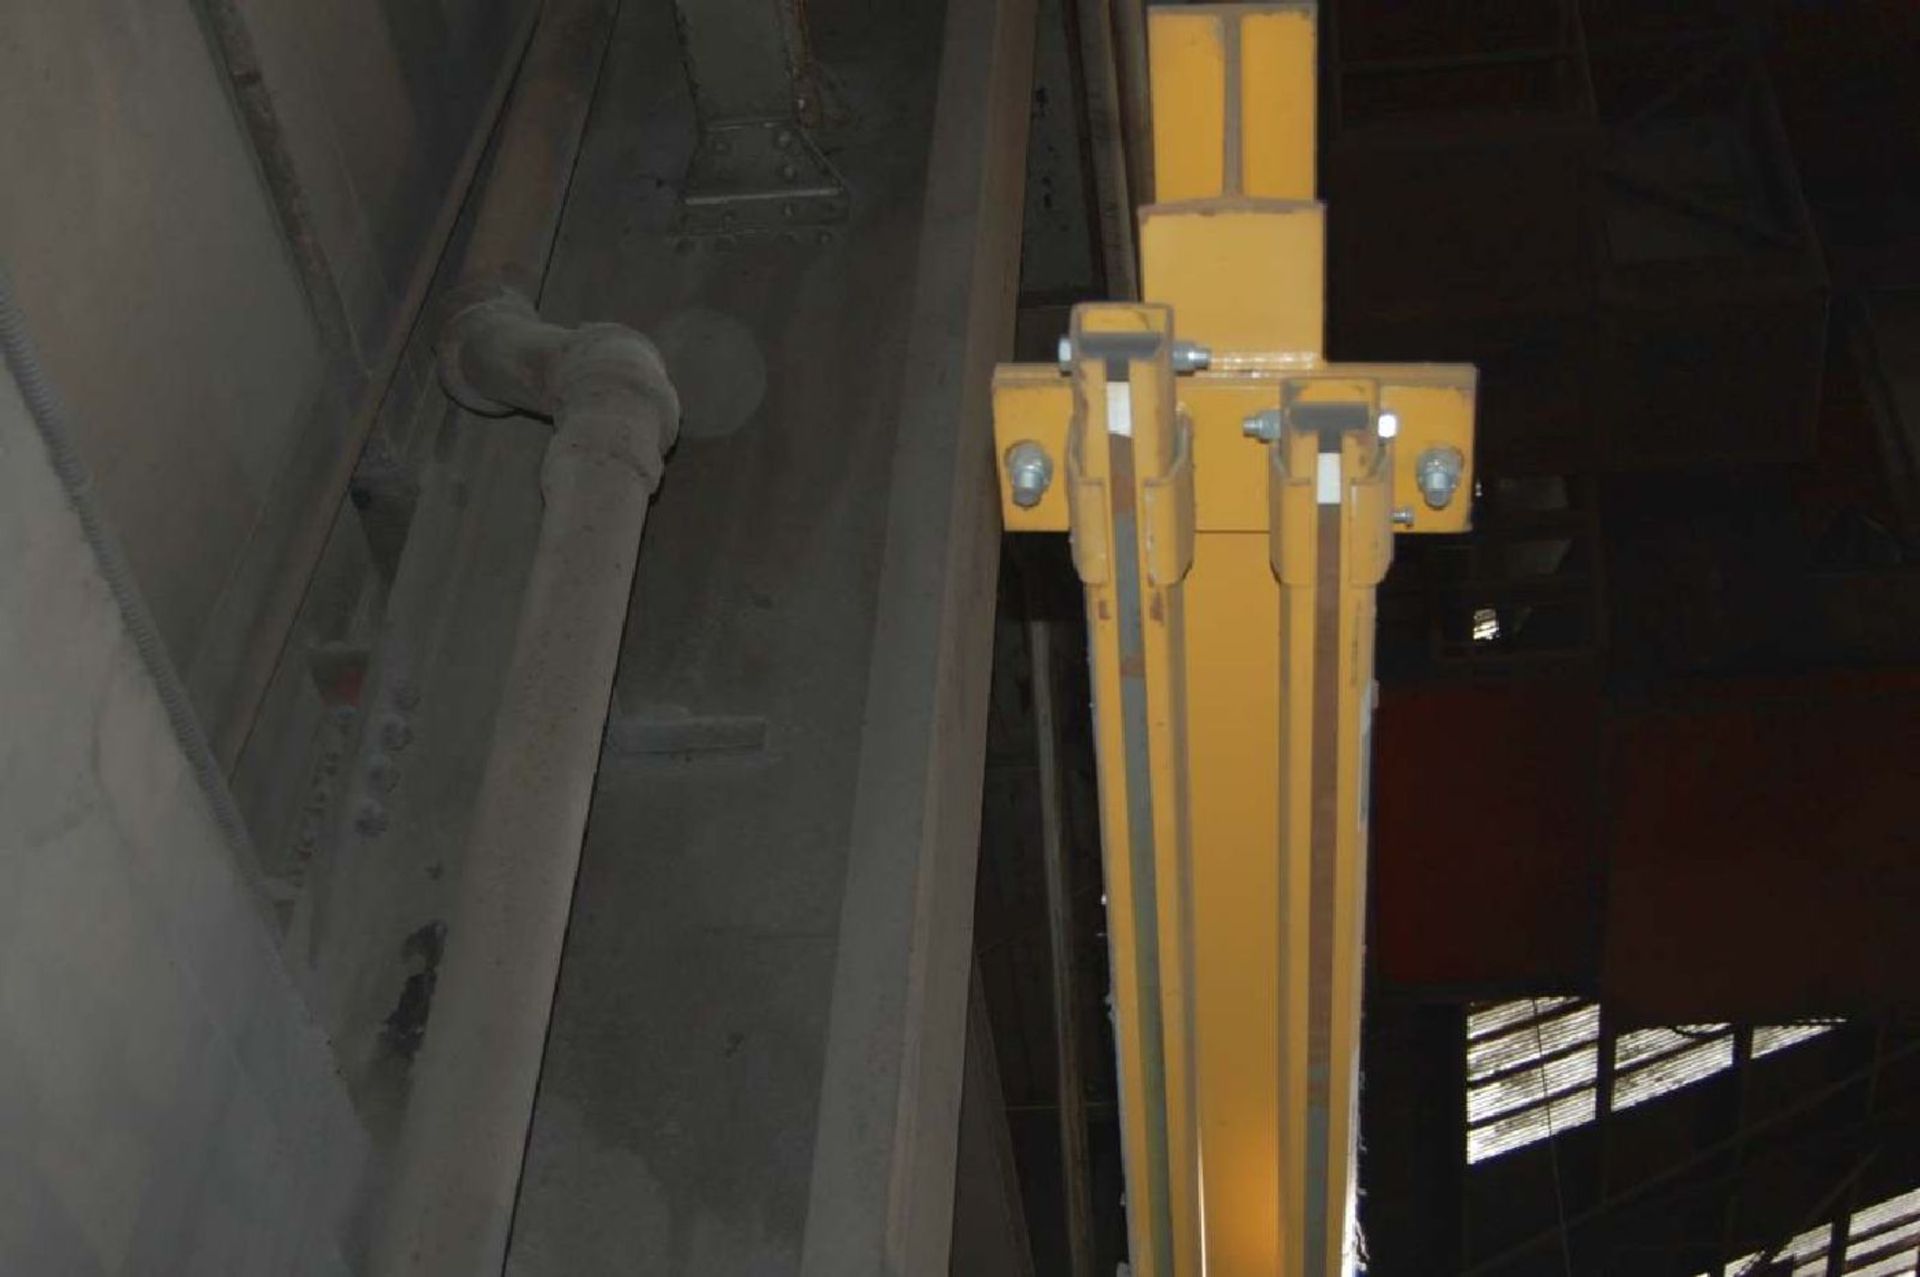 Ridgid 900 Lb Capacity Lifeline Wall-Mounted Jib Crane - Image 3 of 4